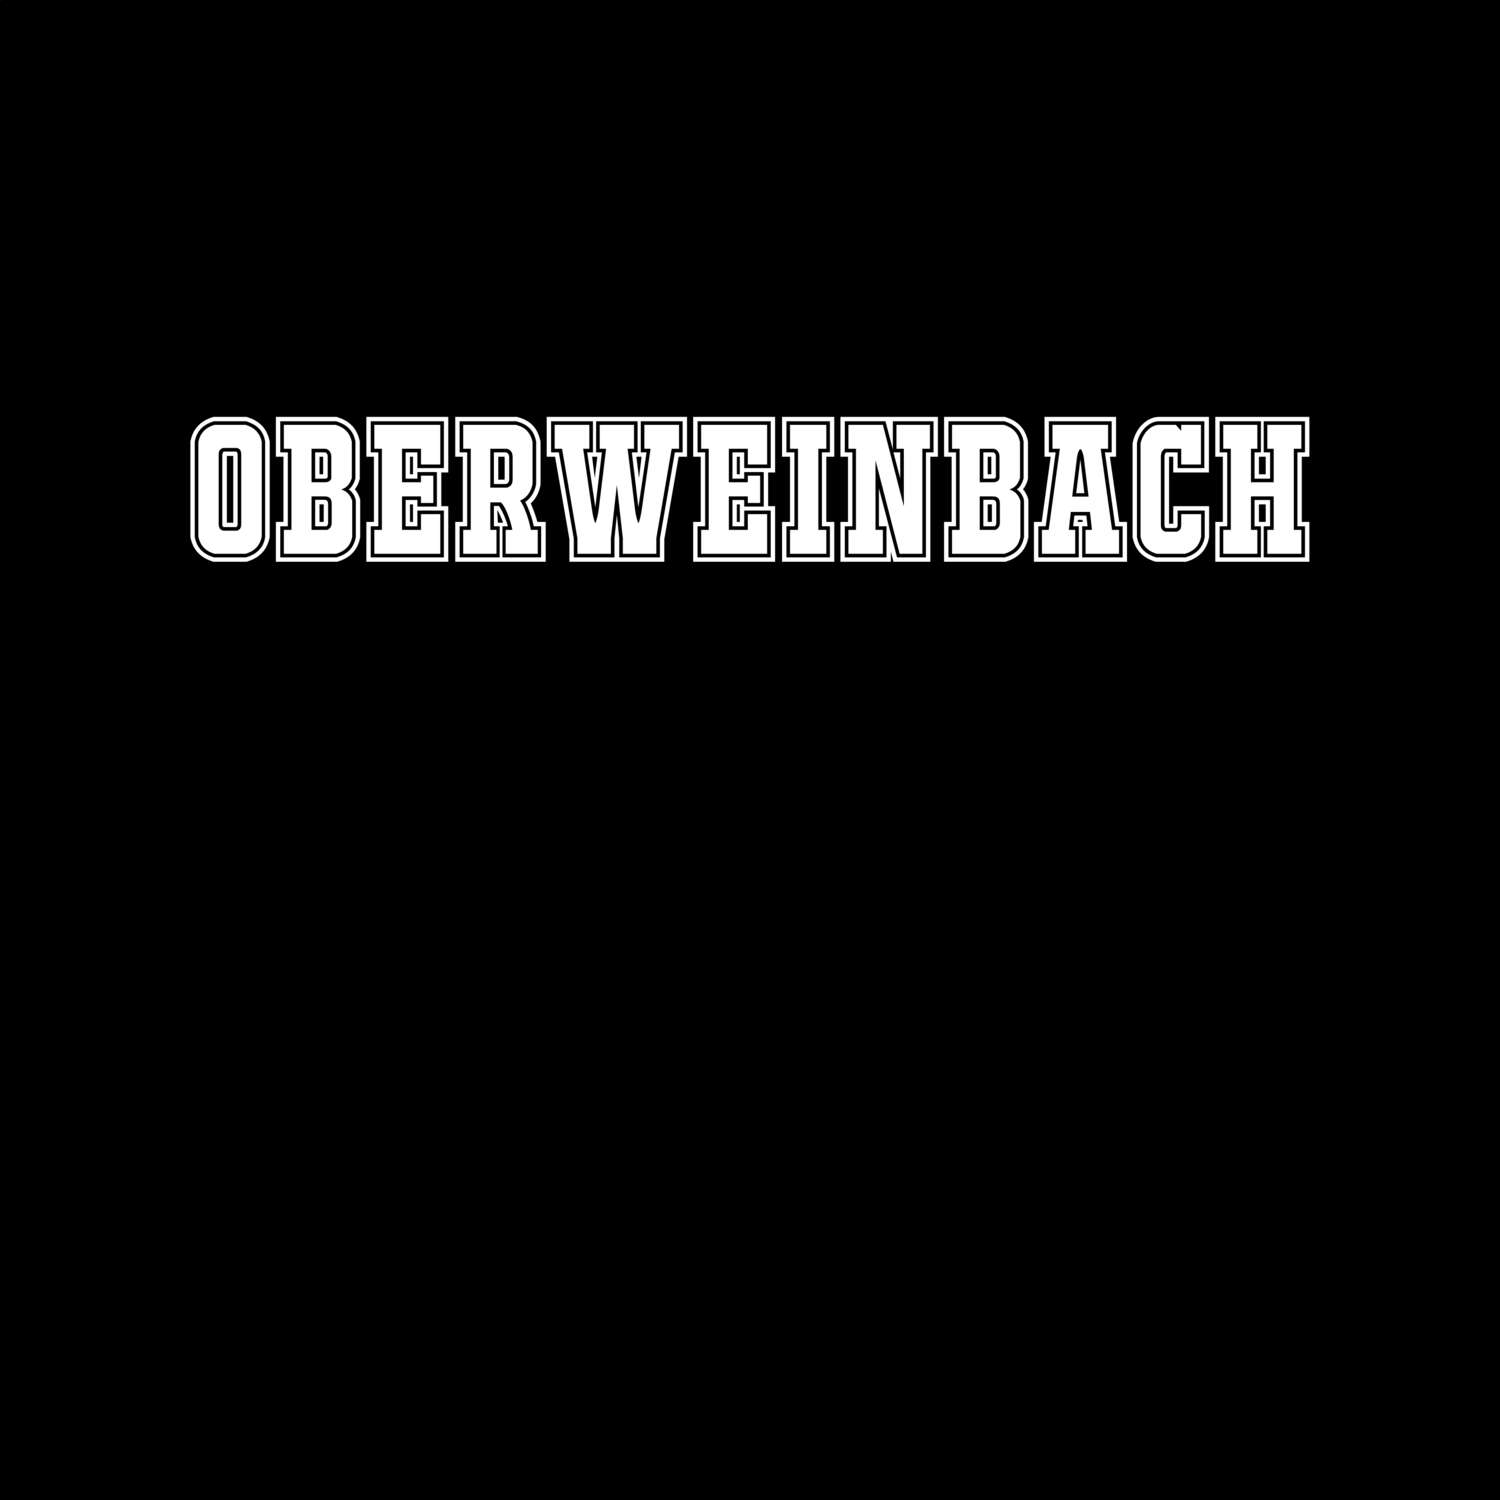 Oberweinbach T-Shirt »Classic«